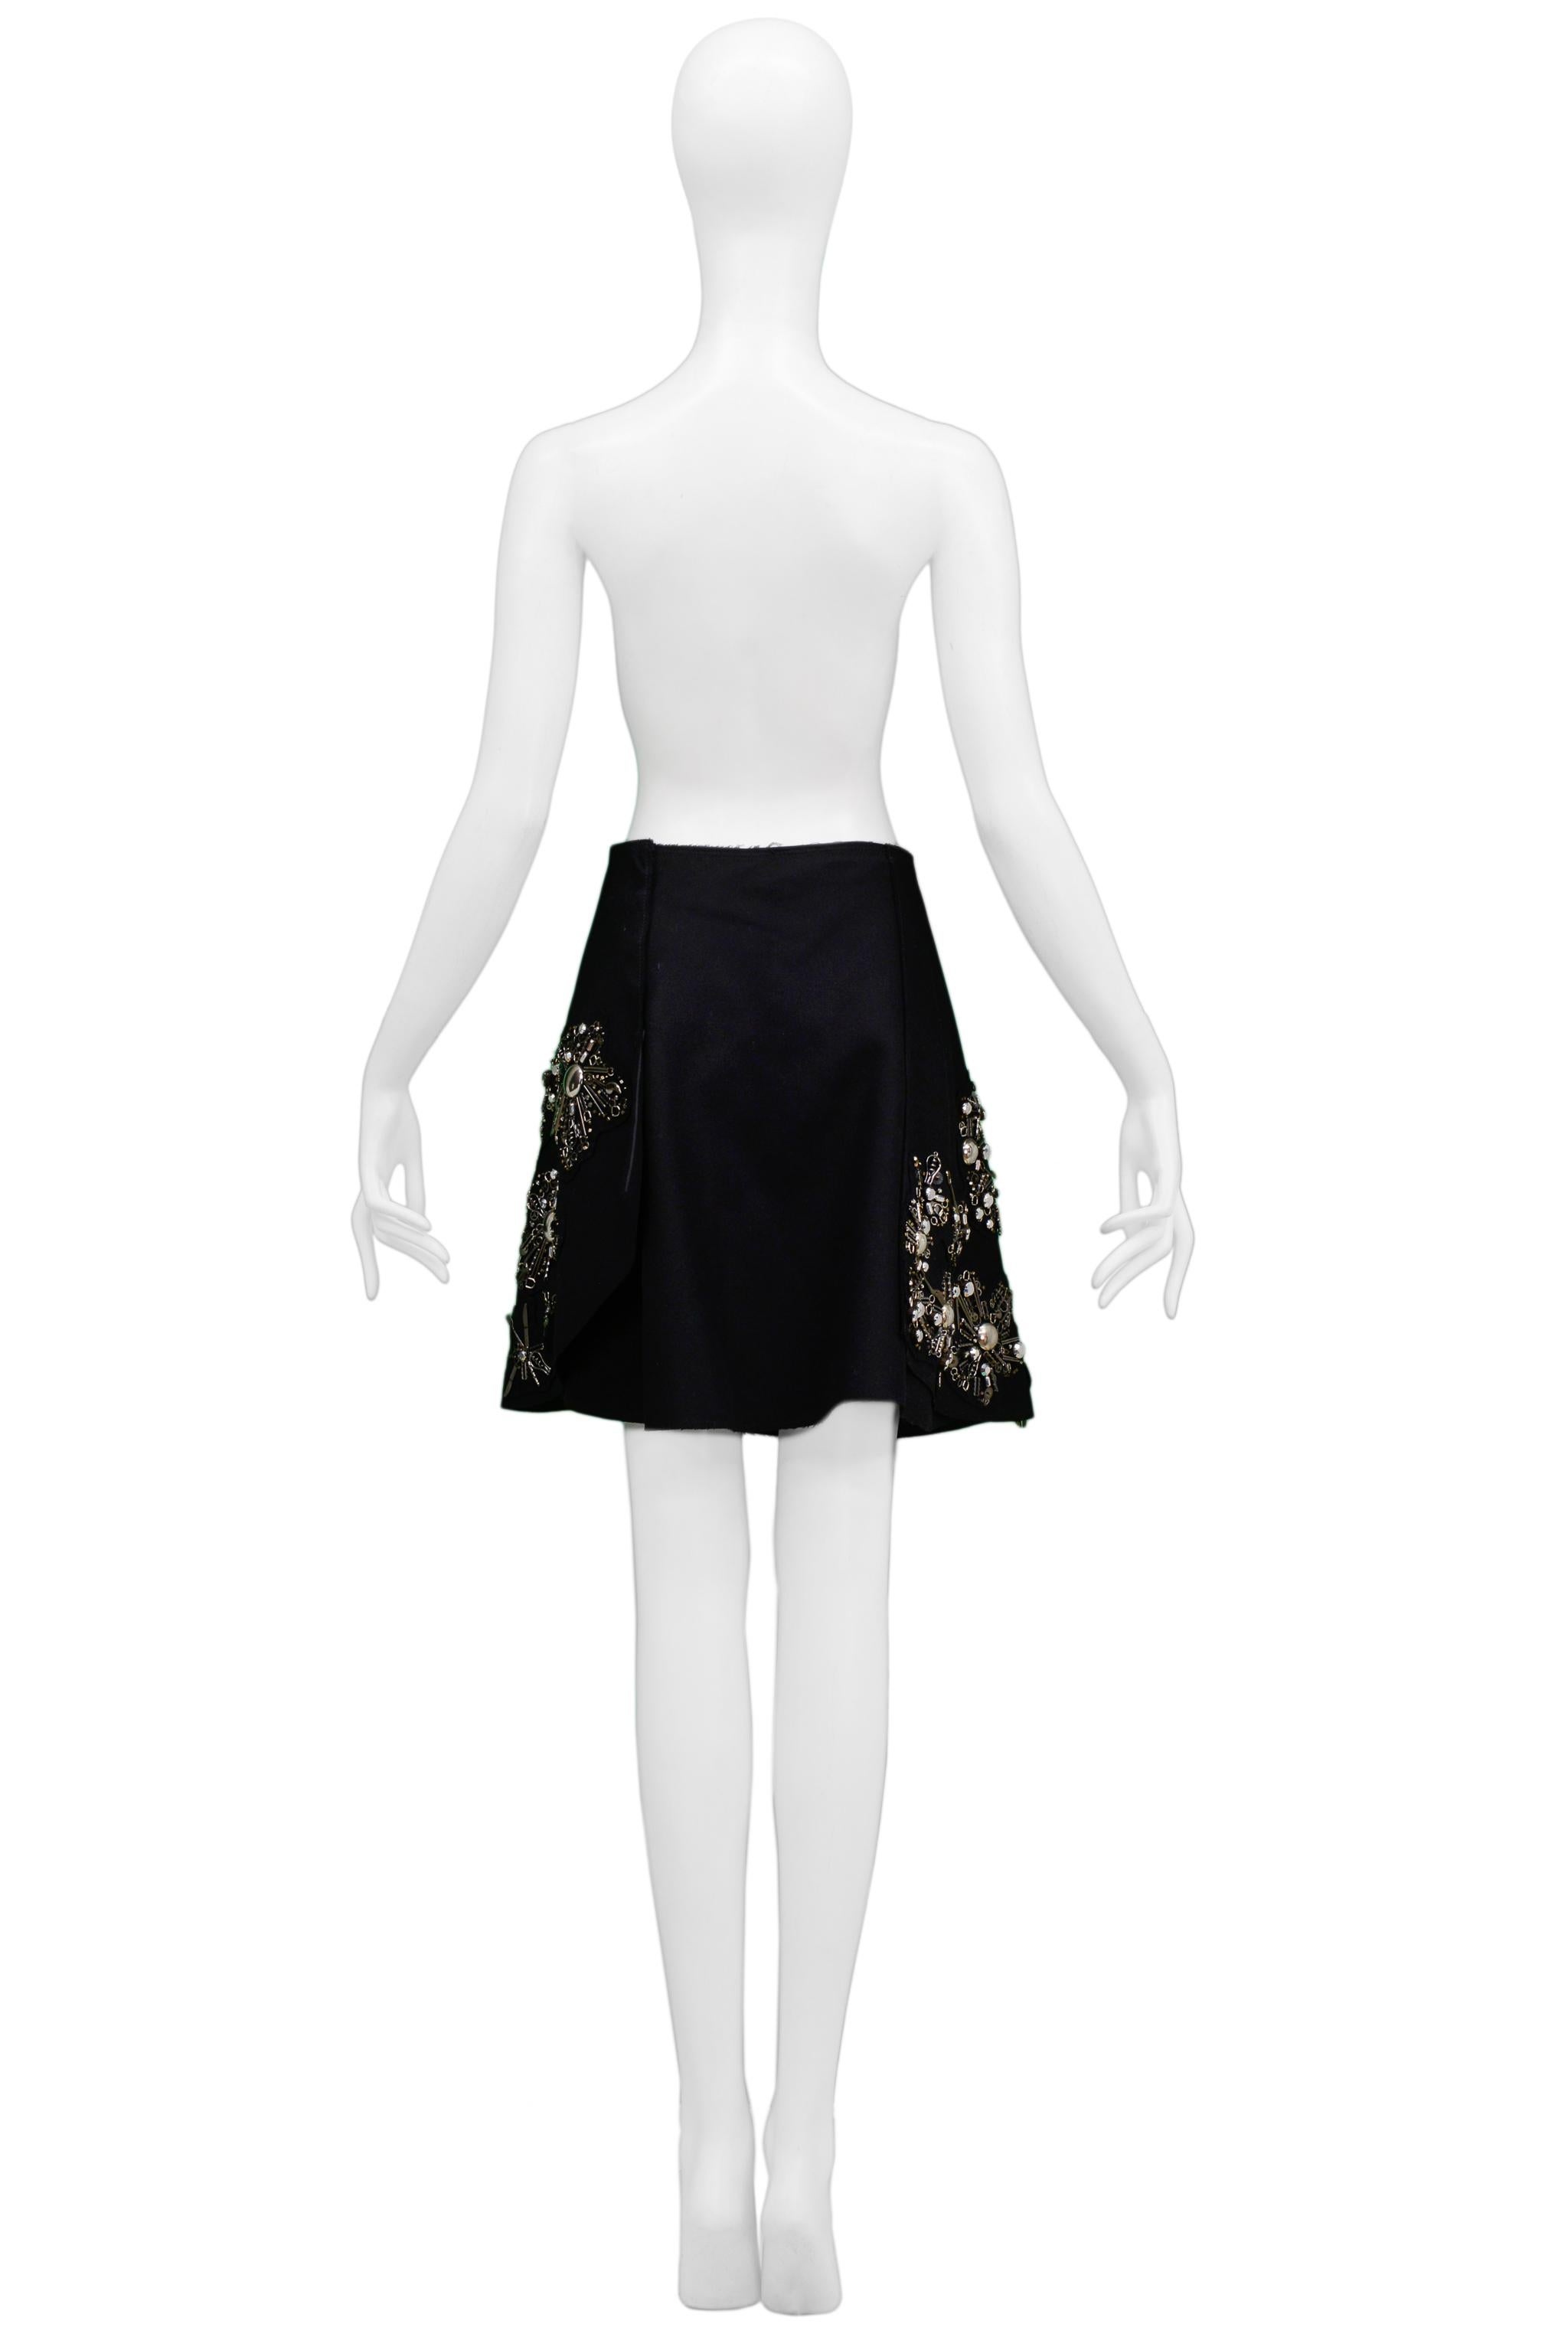 Prada Black Wrap Skirt With Silverware Charms 2006 For Sale 2